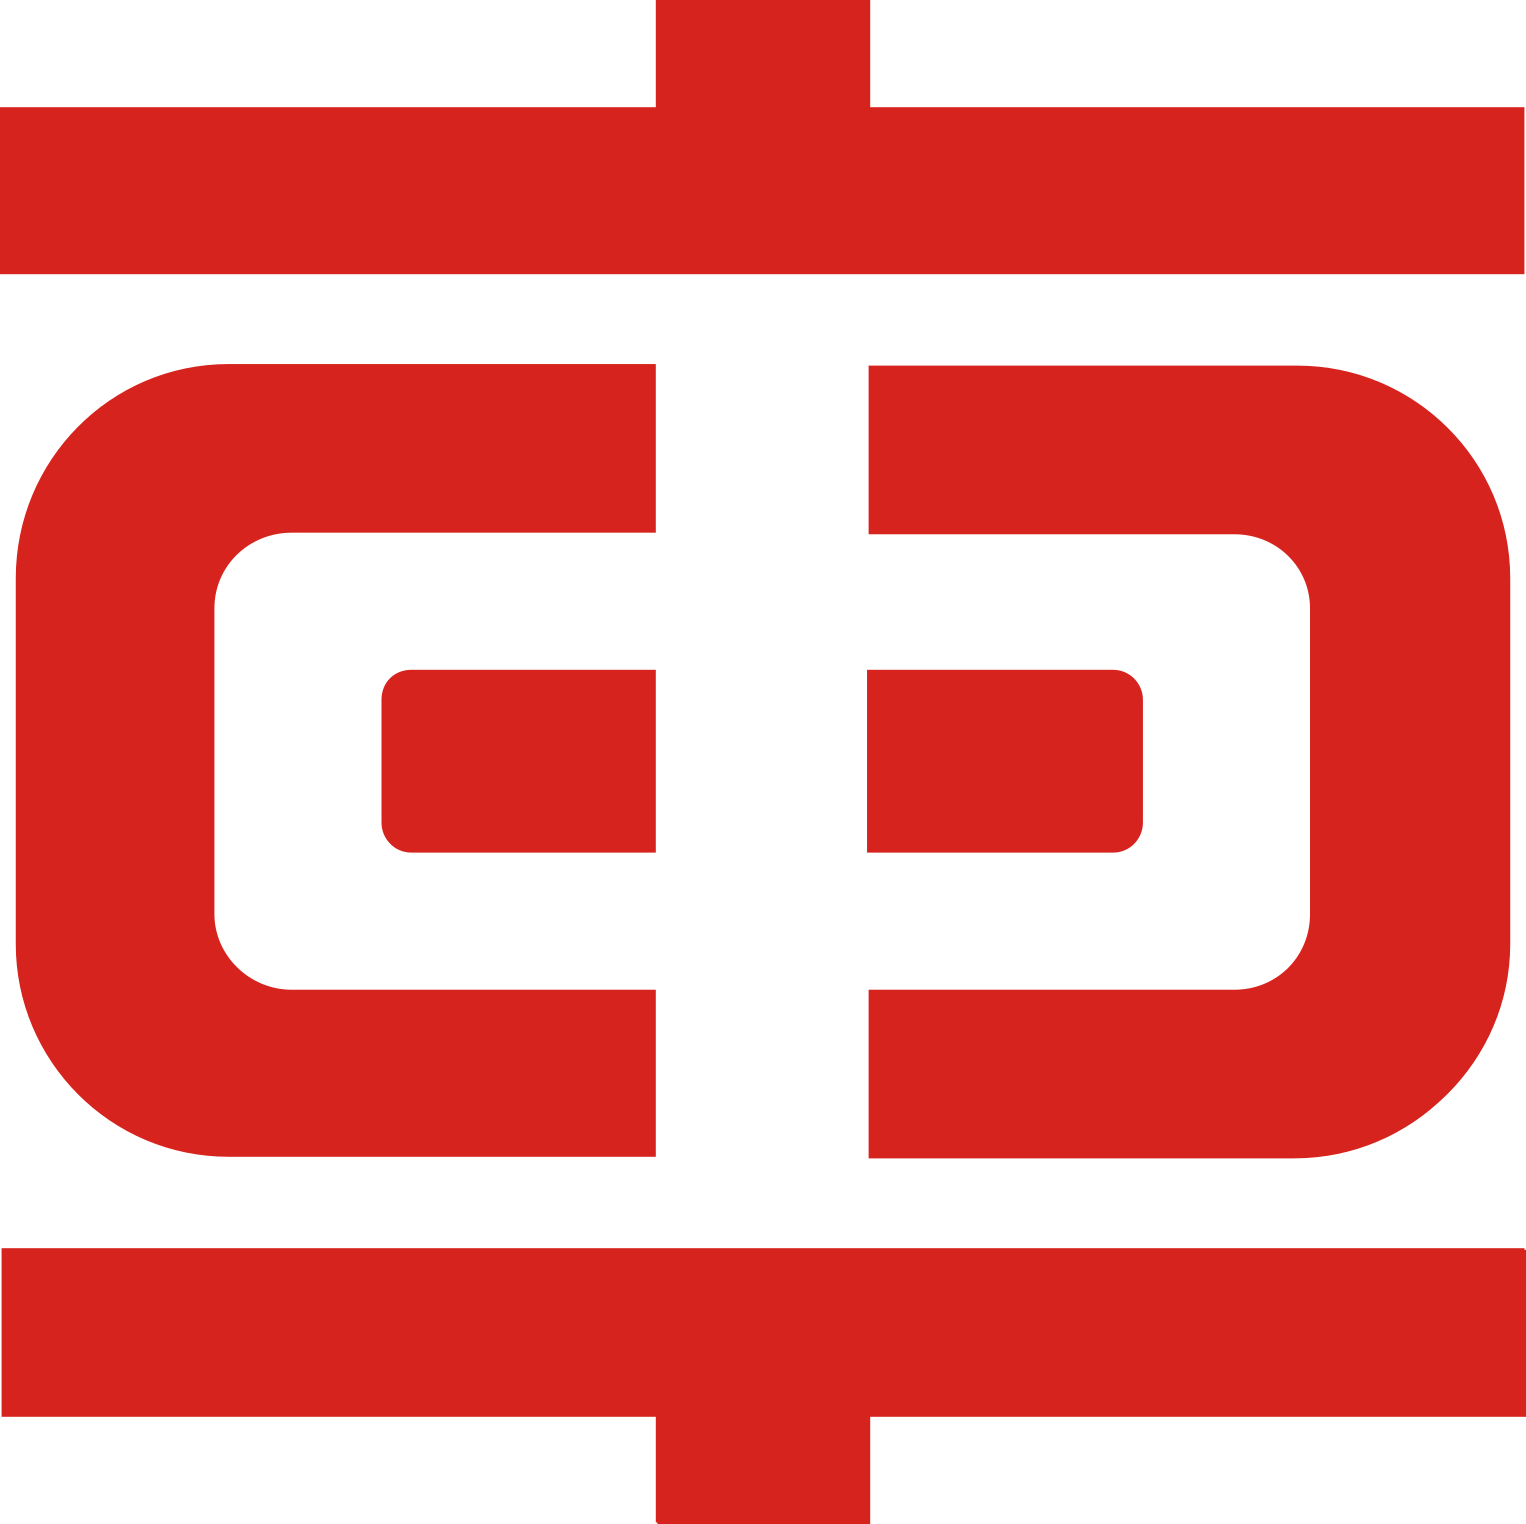 Zhuzhou CRRC Times Electric logo (transparent PNG)